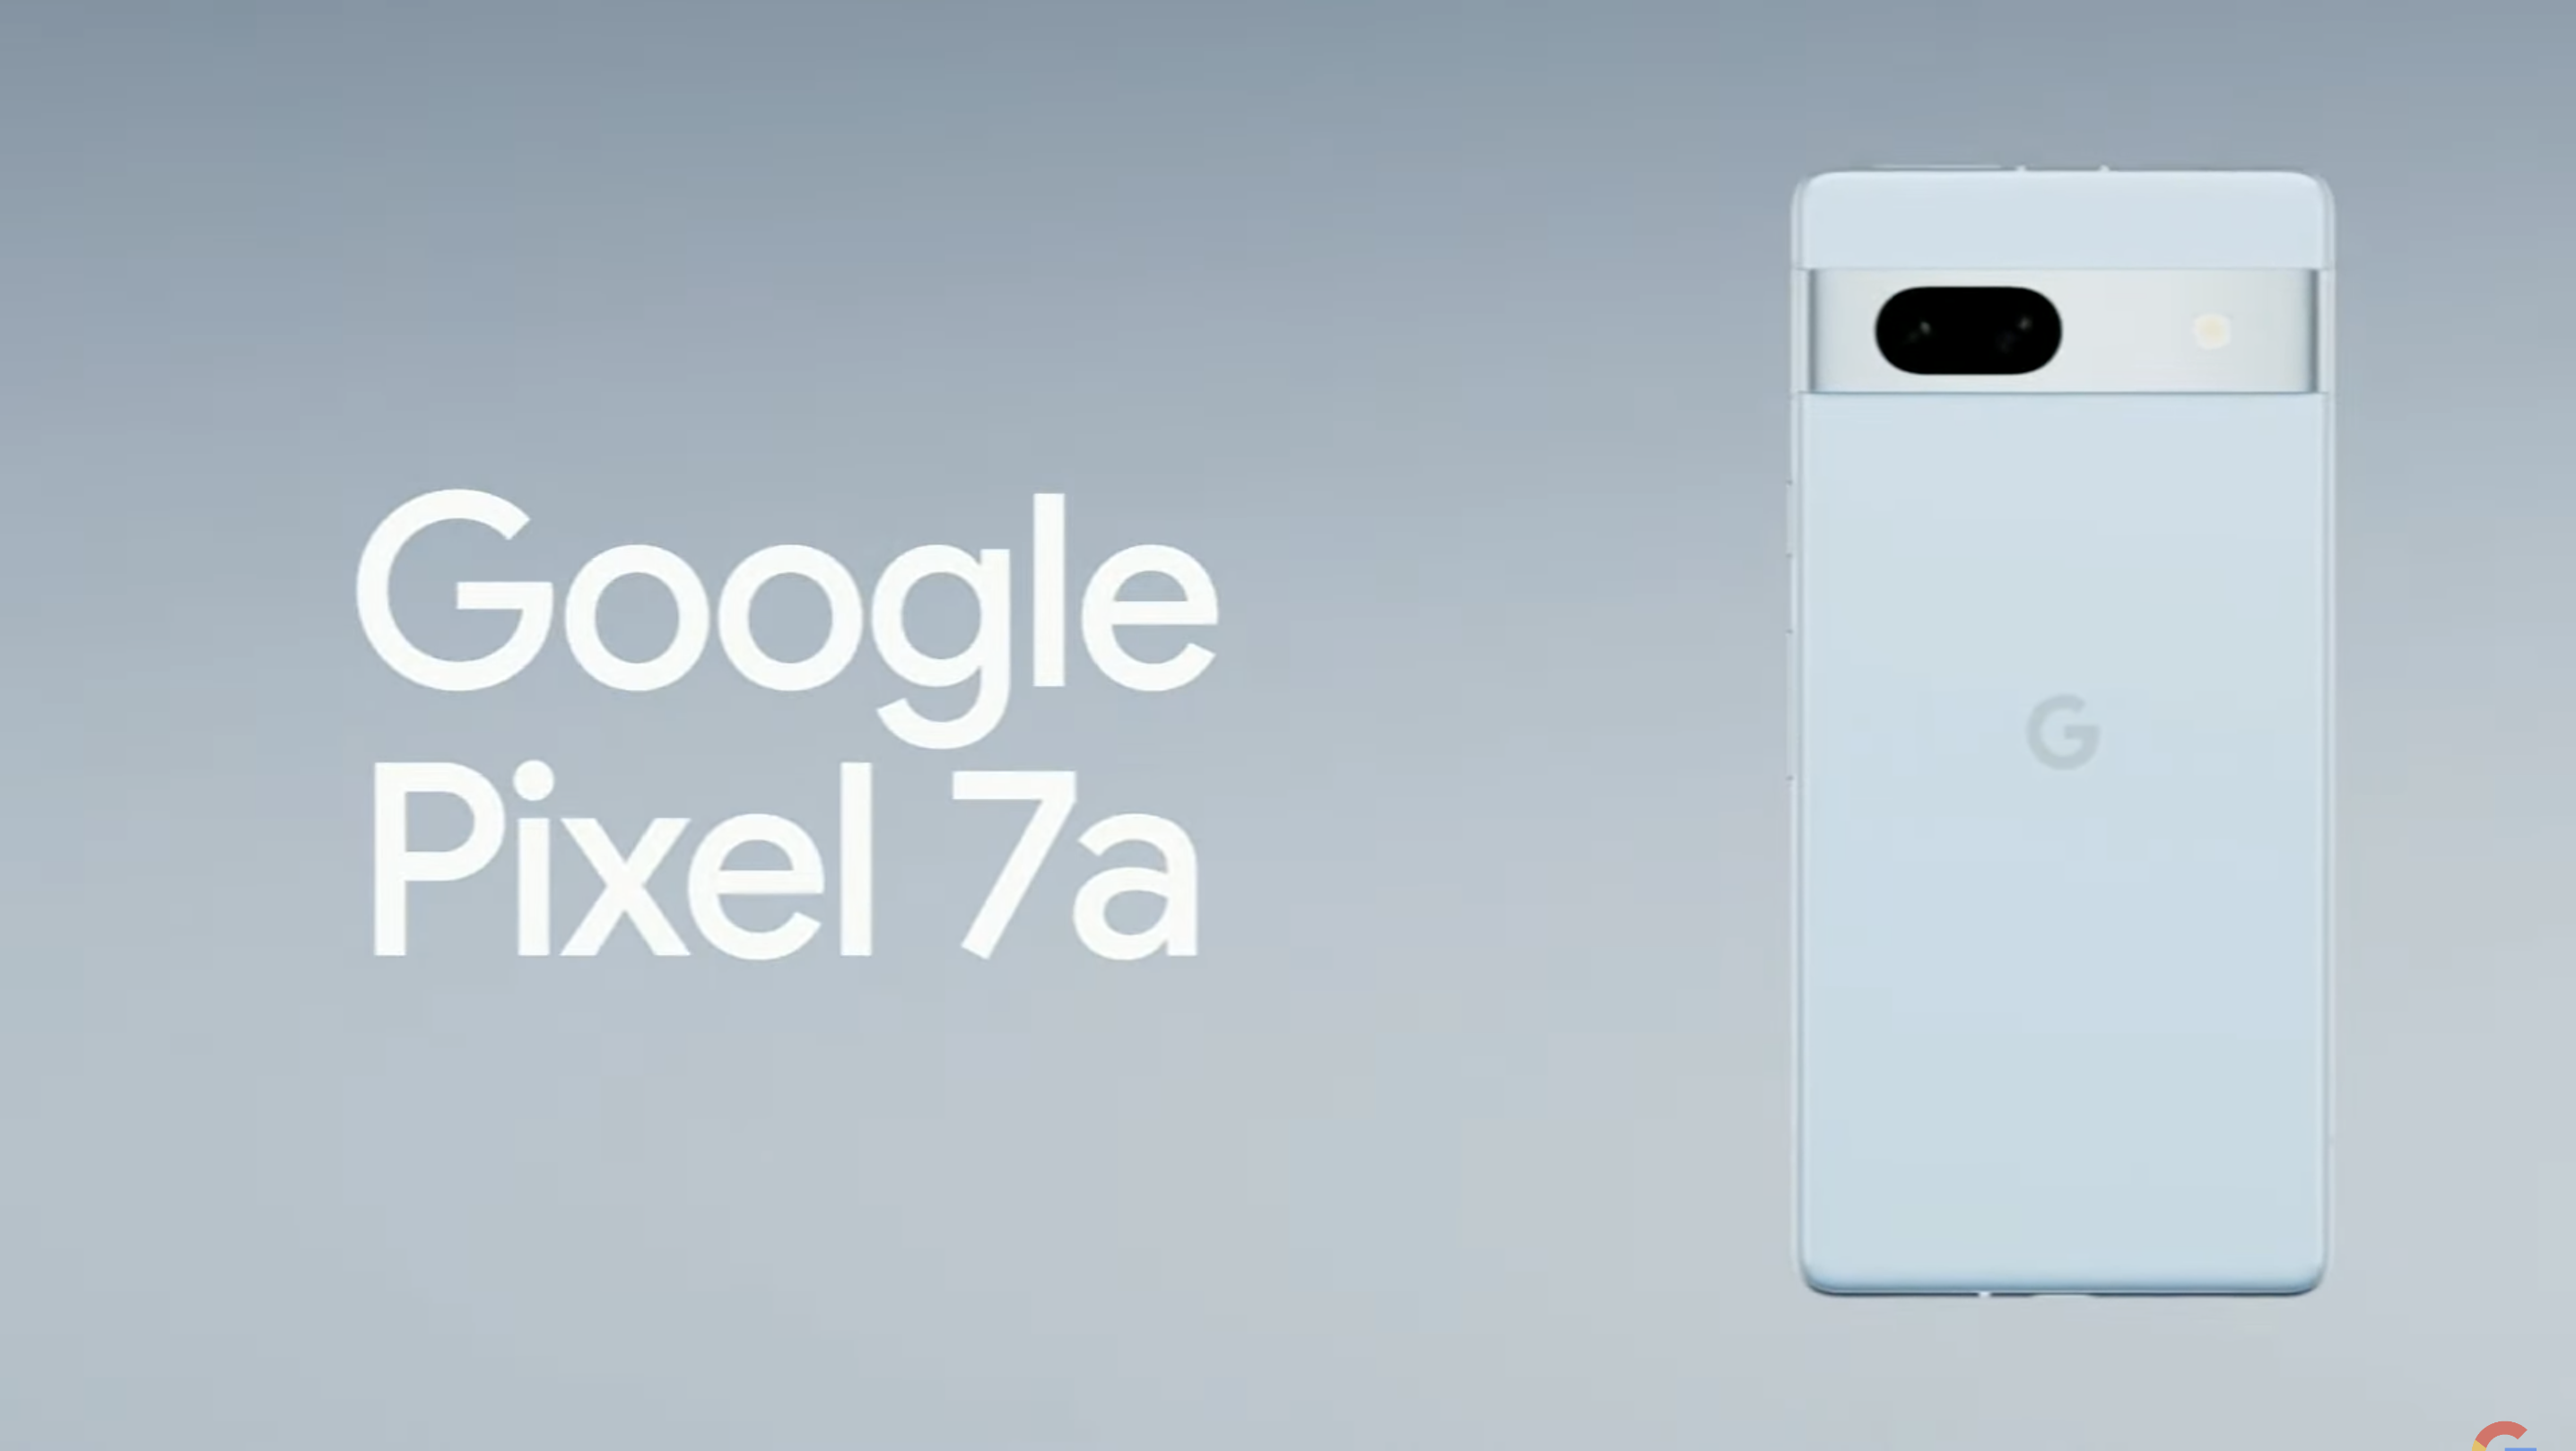 Google Pixel 7a – Specs, Pricing & Reviews